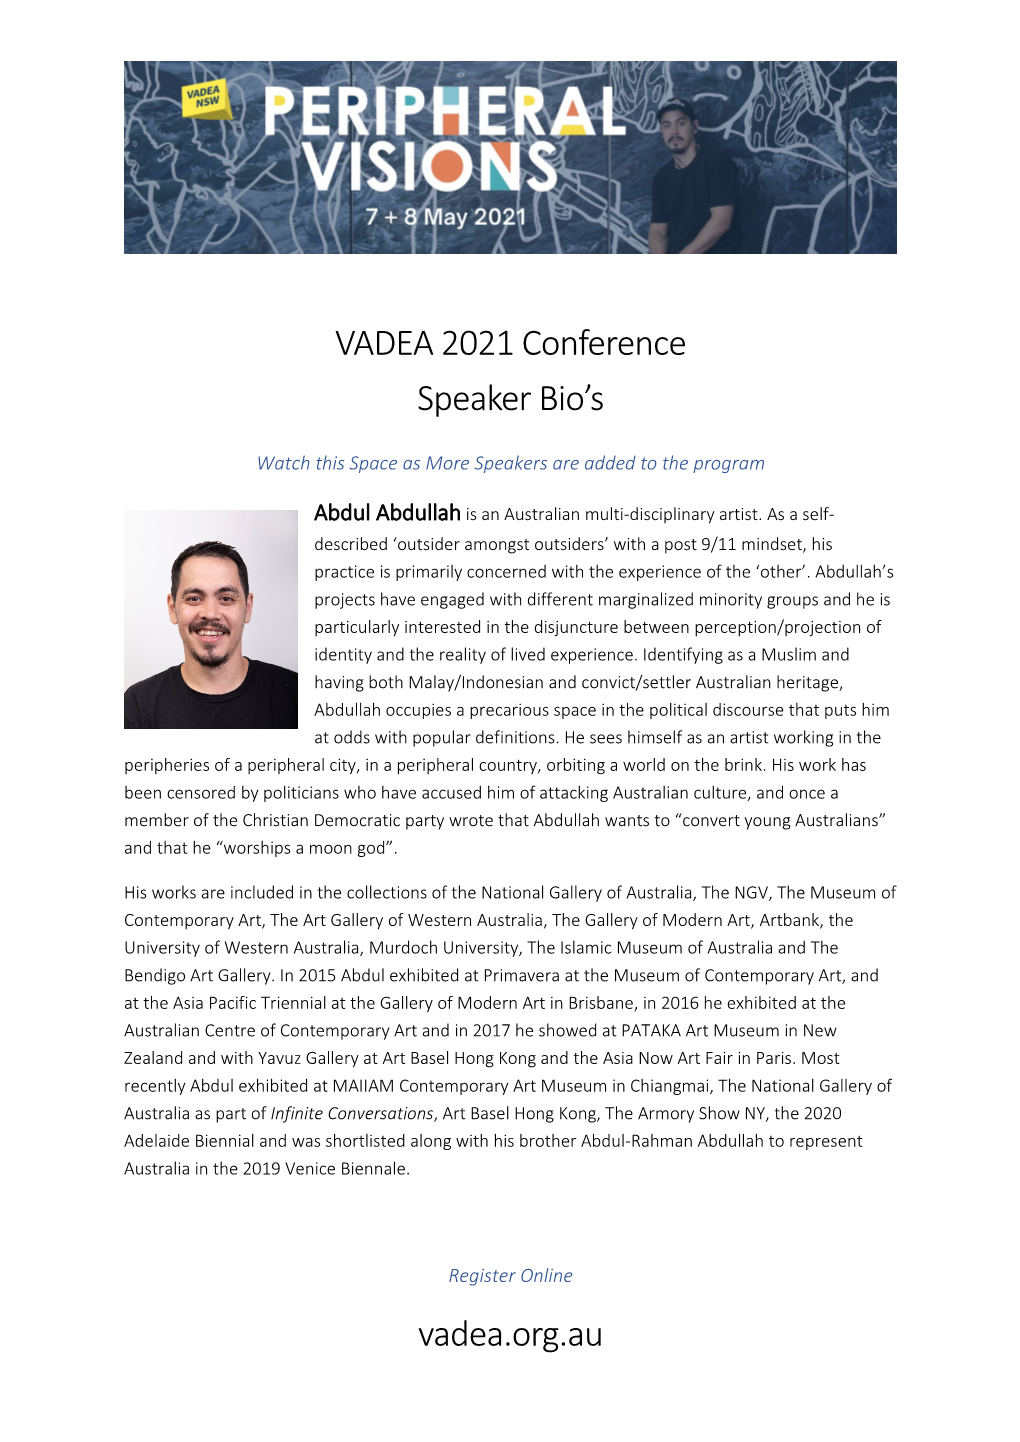 VADEA 2021 Conference Speaker Bio's